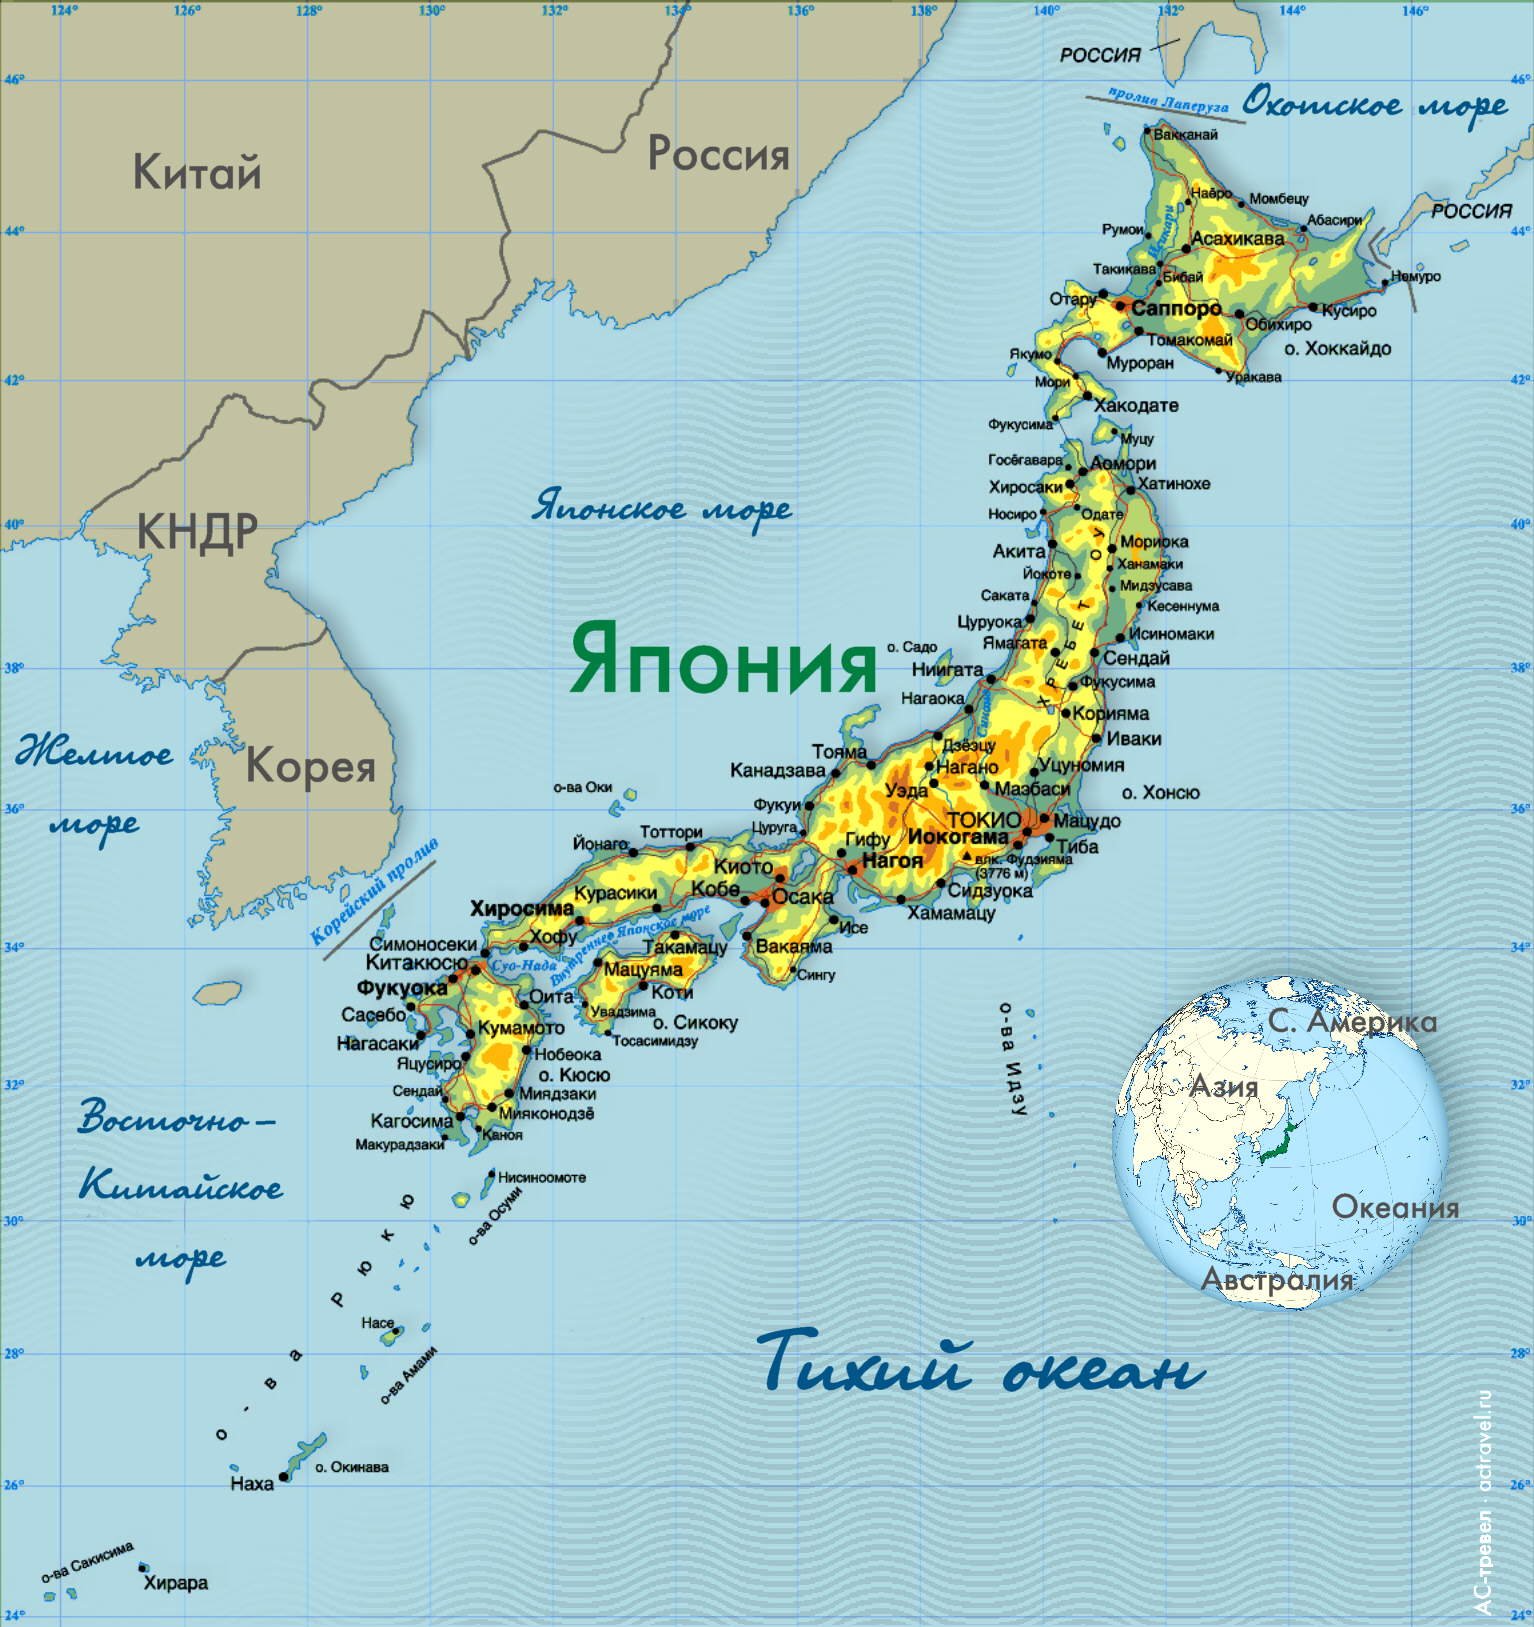 Милая хоккайдо я тебя хонсю. Остров Хонсю на карте Японии. Япония остров Хонсю Кюсю Сикоку Хоккайдо на карте. Остров Кюсю в Японии на карте.